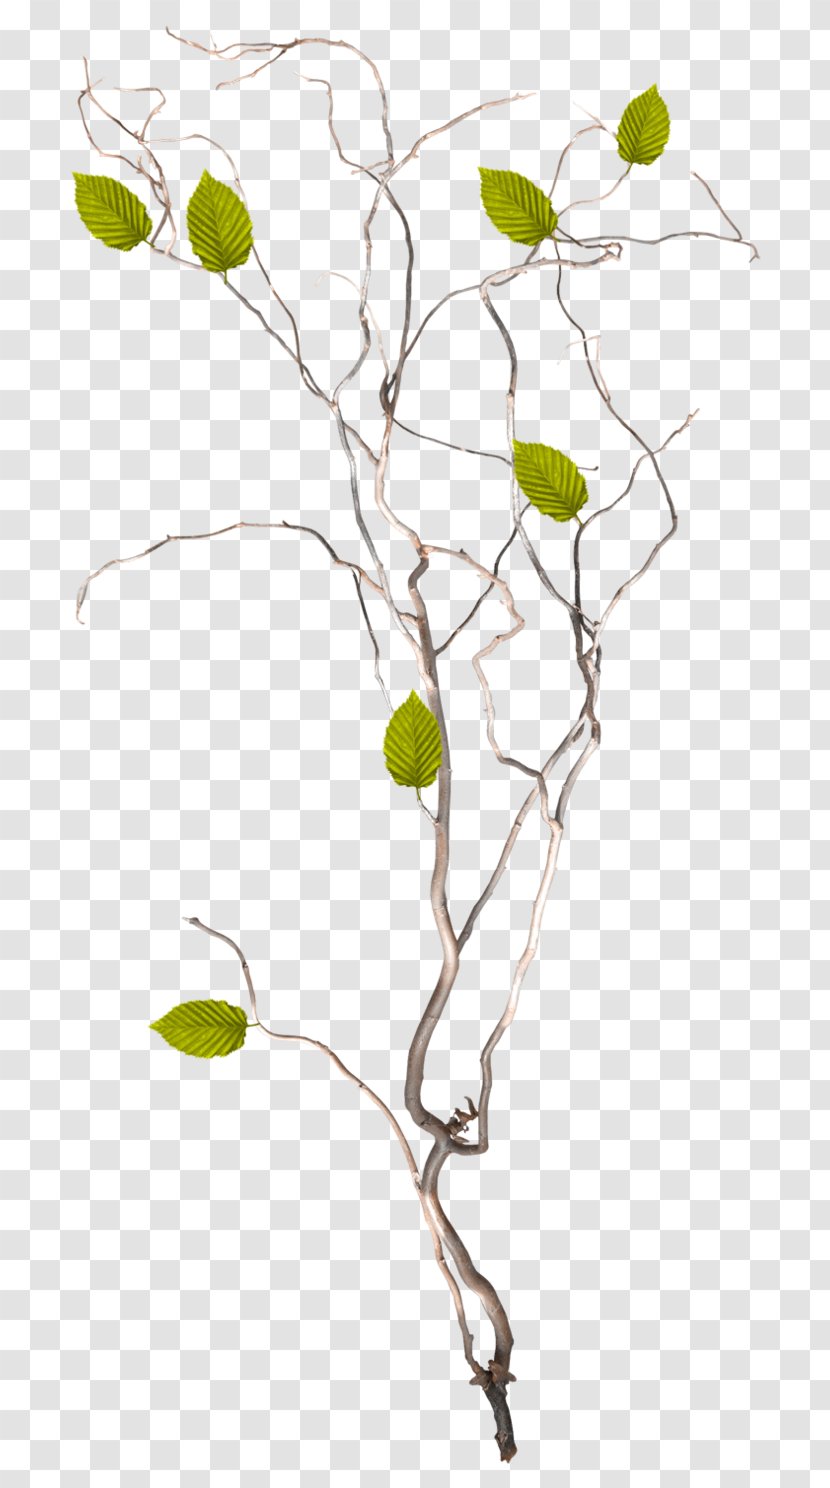 Twig /m/02csf Drawing Plant Stem Leaf - Flowering - Fruit Transparent PNG